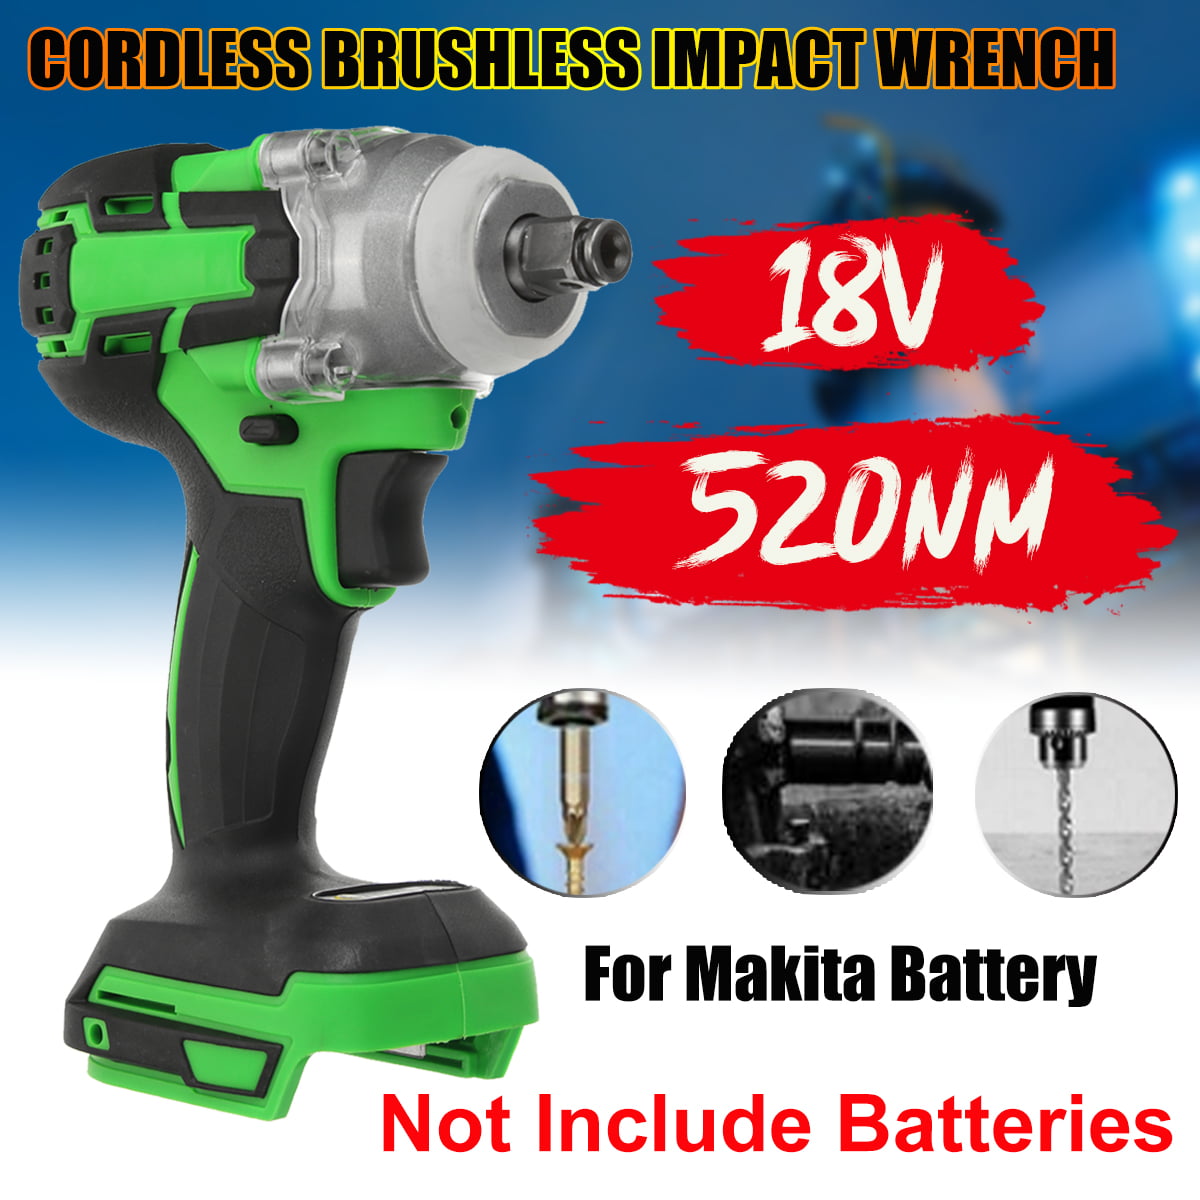 For Makita Battery DTW285Z Cordless Brushless Impact Wrench 18V 520Nm 1/2" Body 